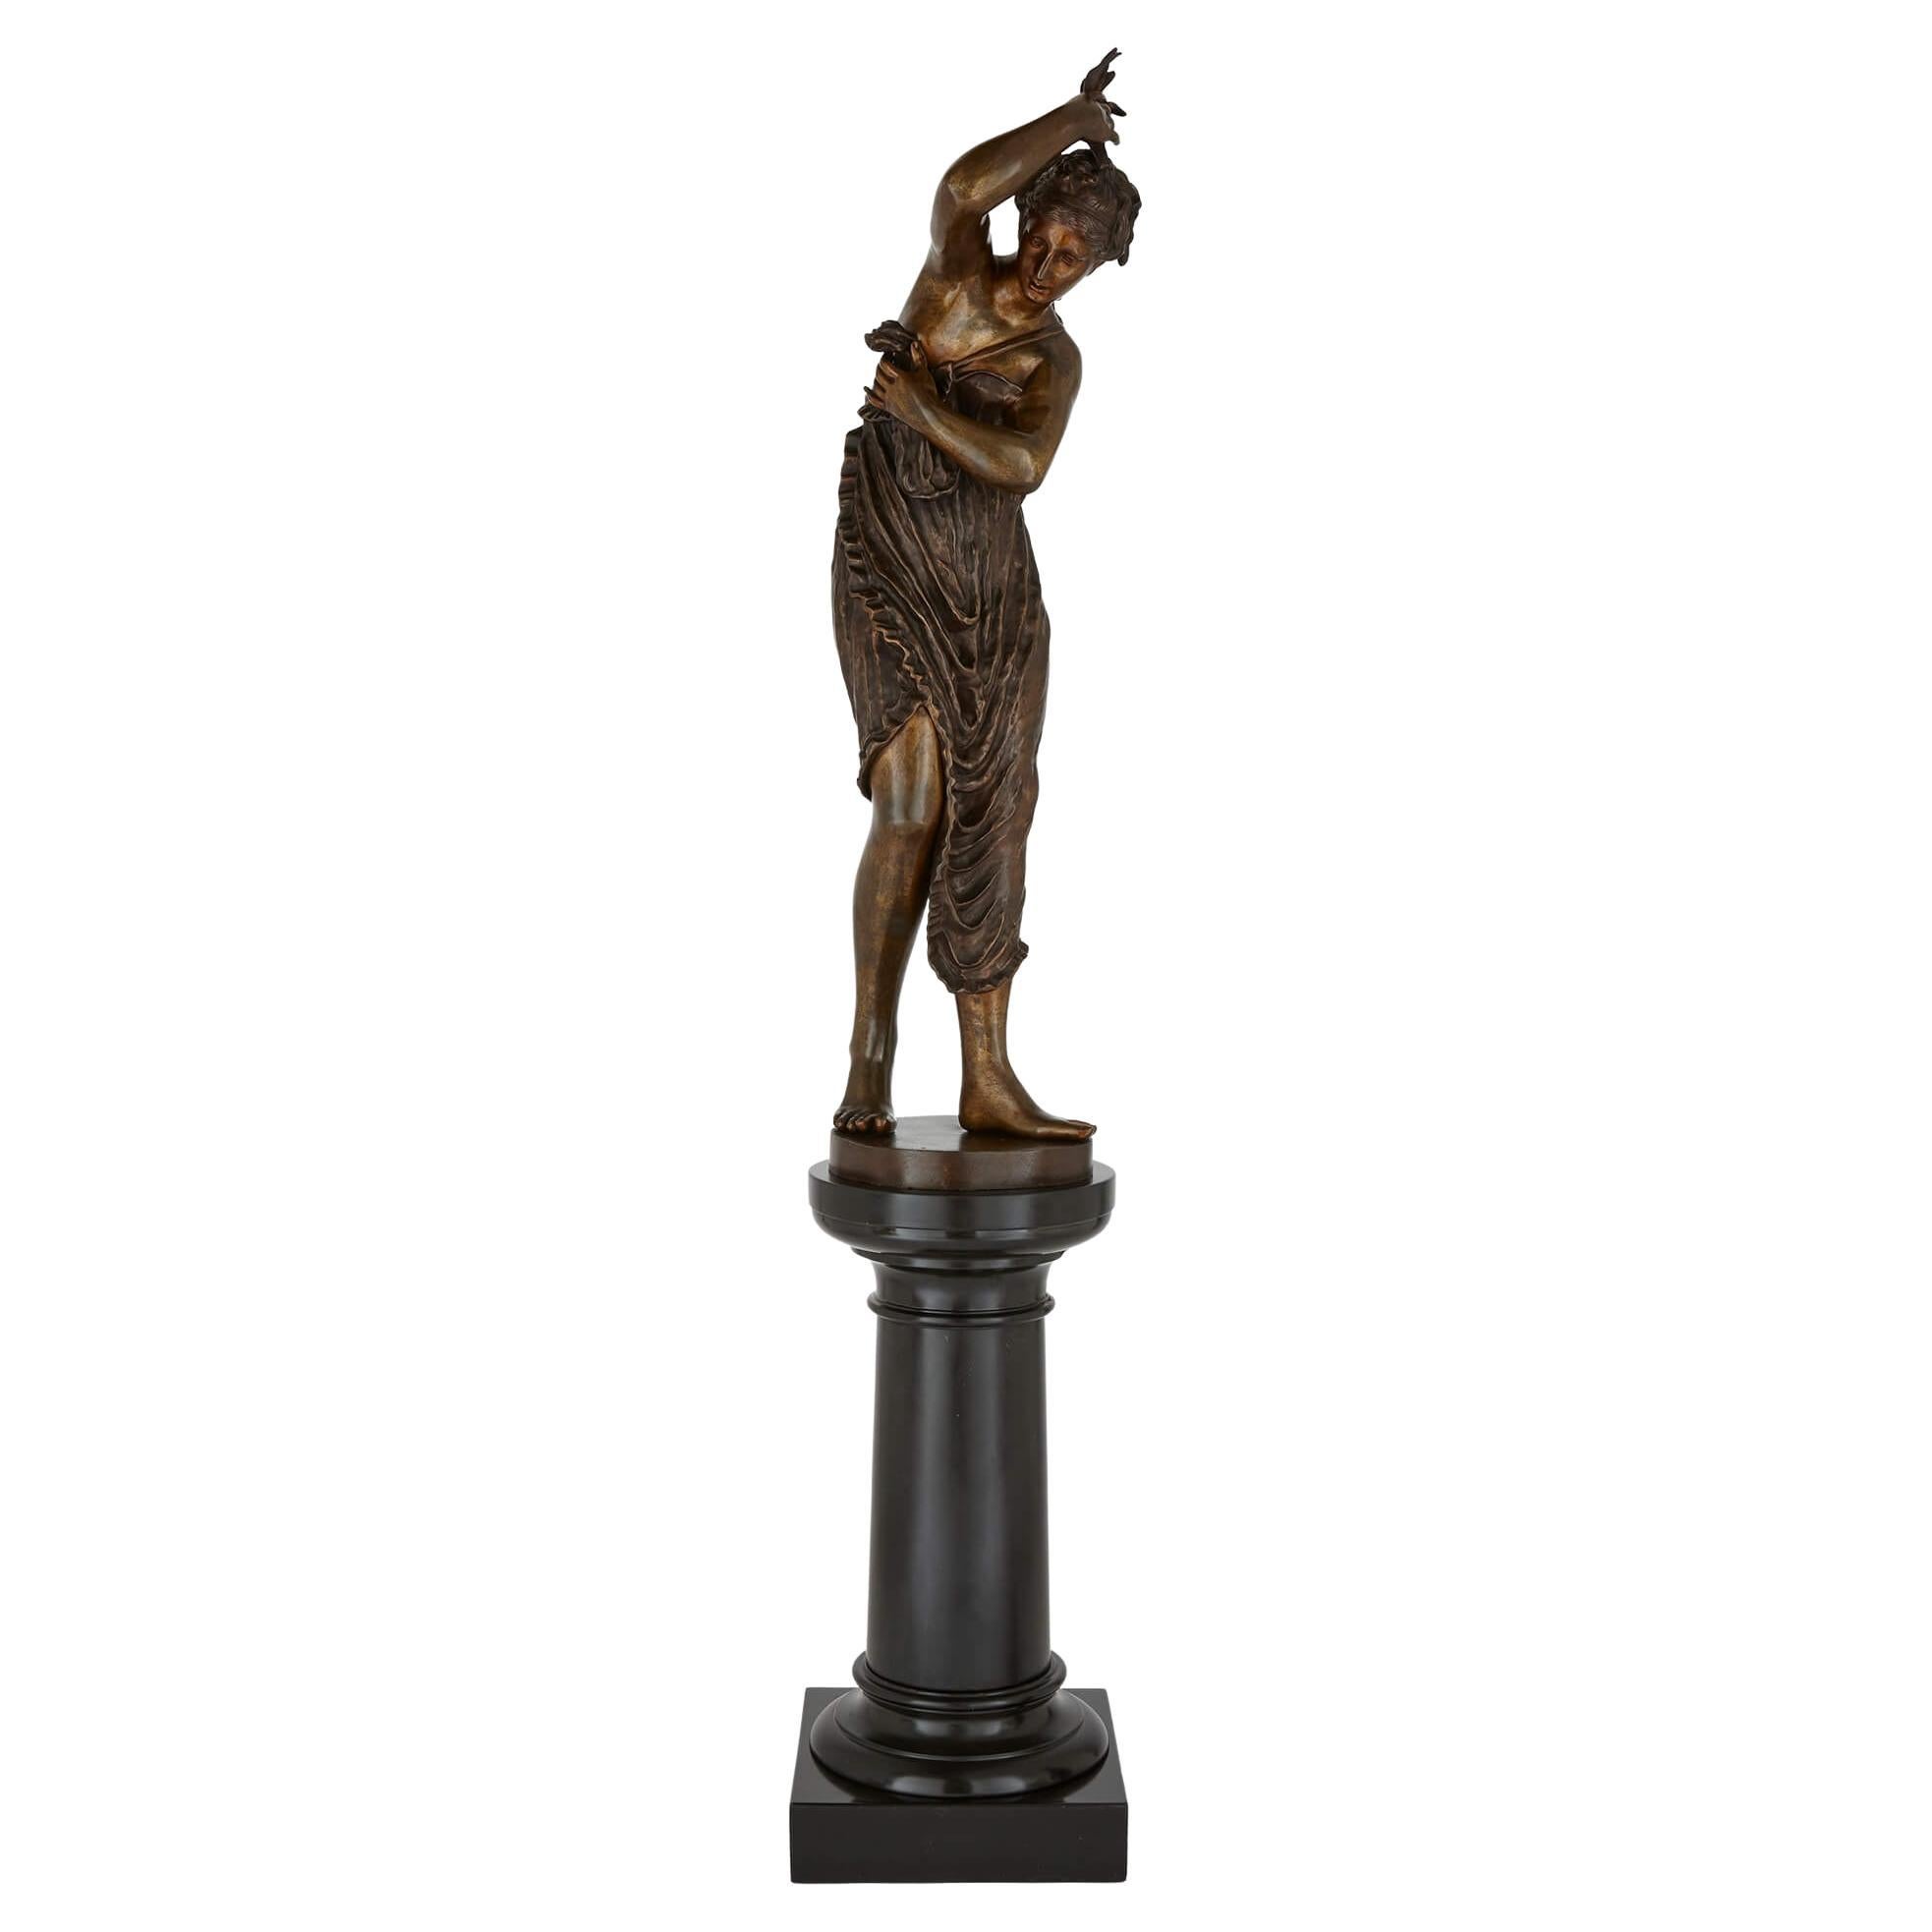 Large Patinated Bronze Figure of Ondine